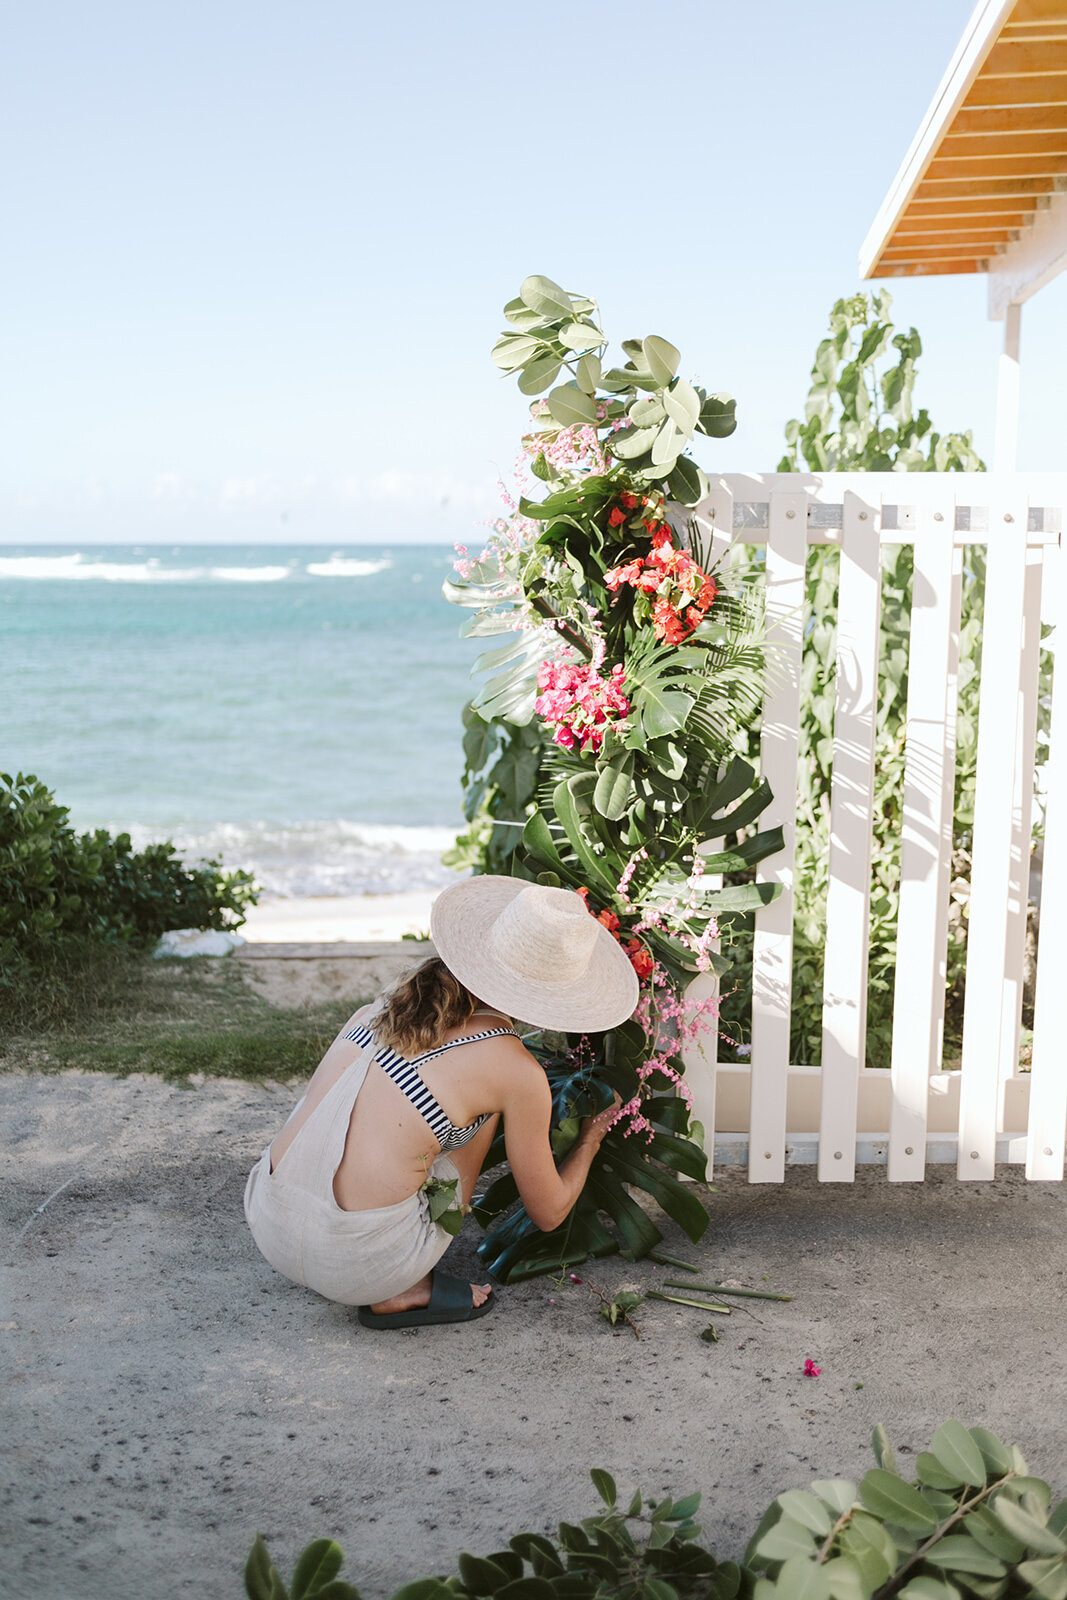 Mokuleia-North-Shore-Hawaii-Beach-House-Wedding-ceremony-arch-florals